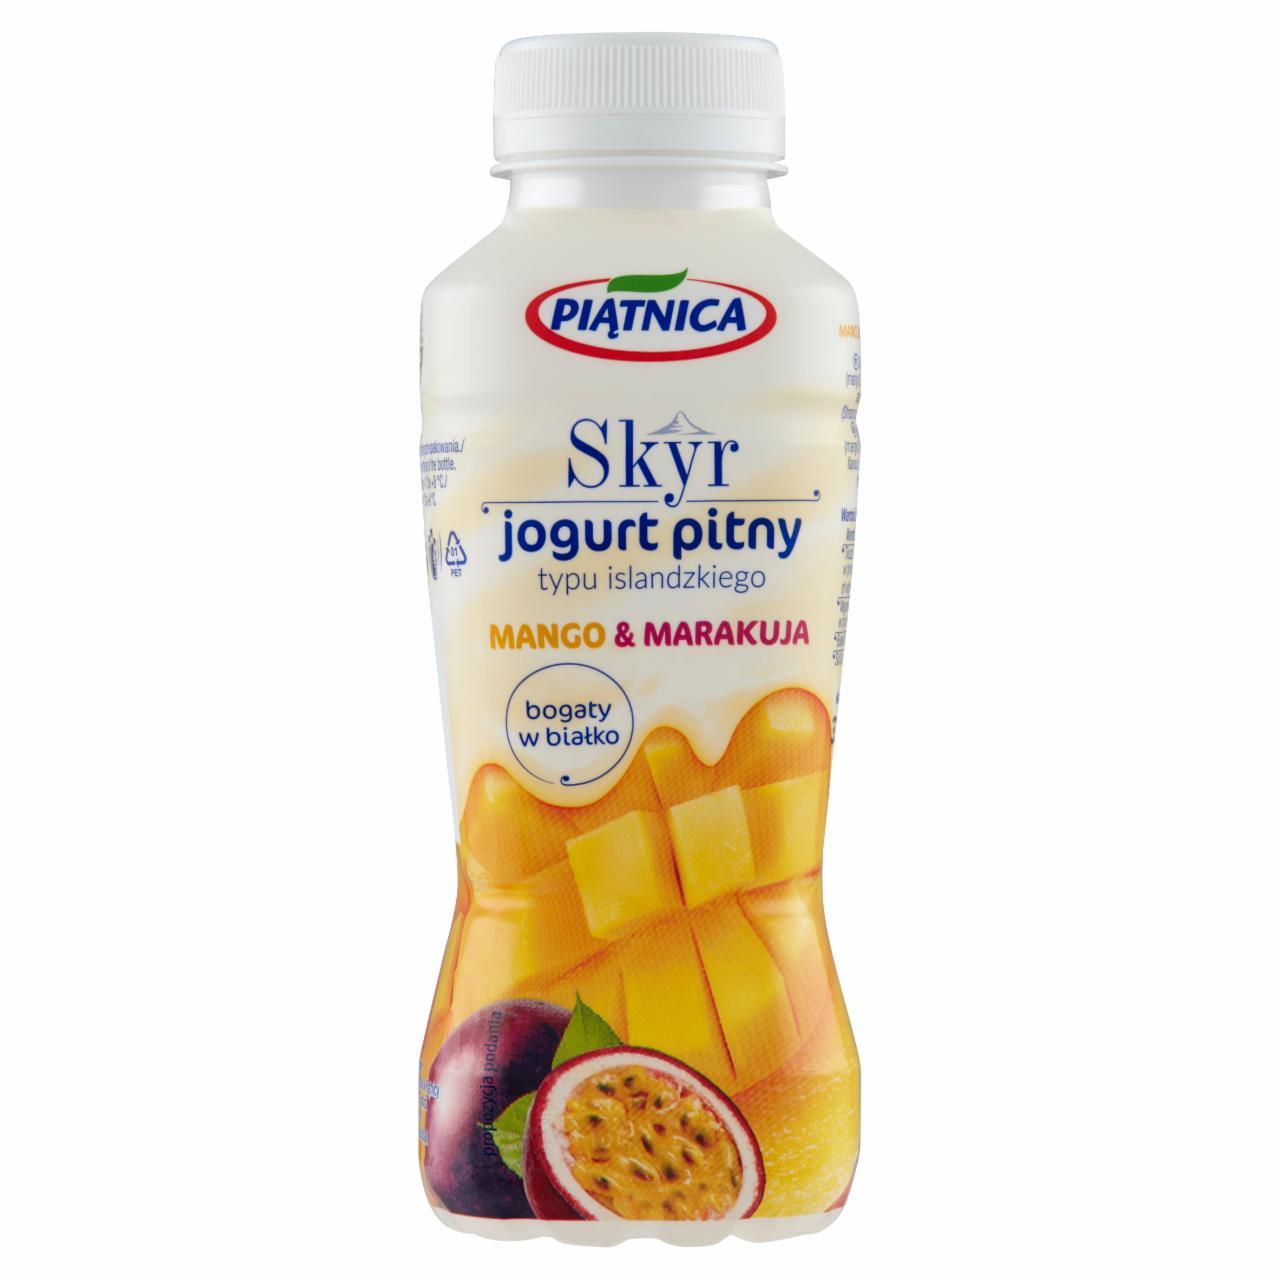 Fotografie - Skyr jogurt pitny mango & marakuja Piątnica